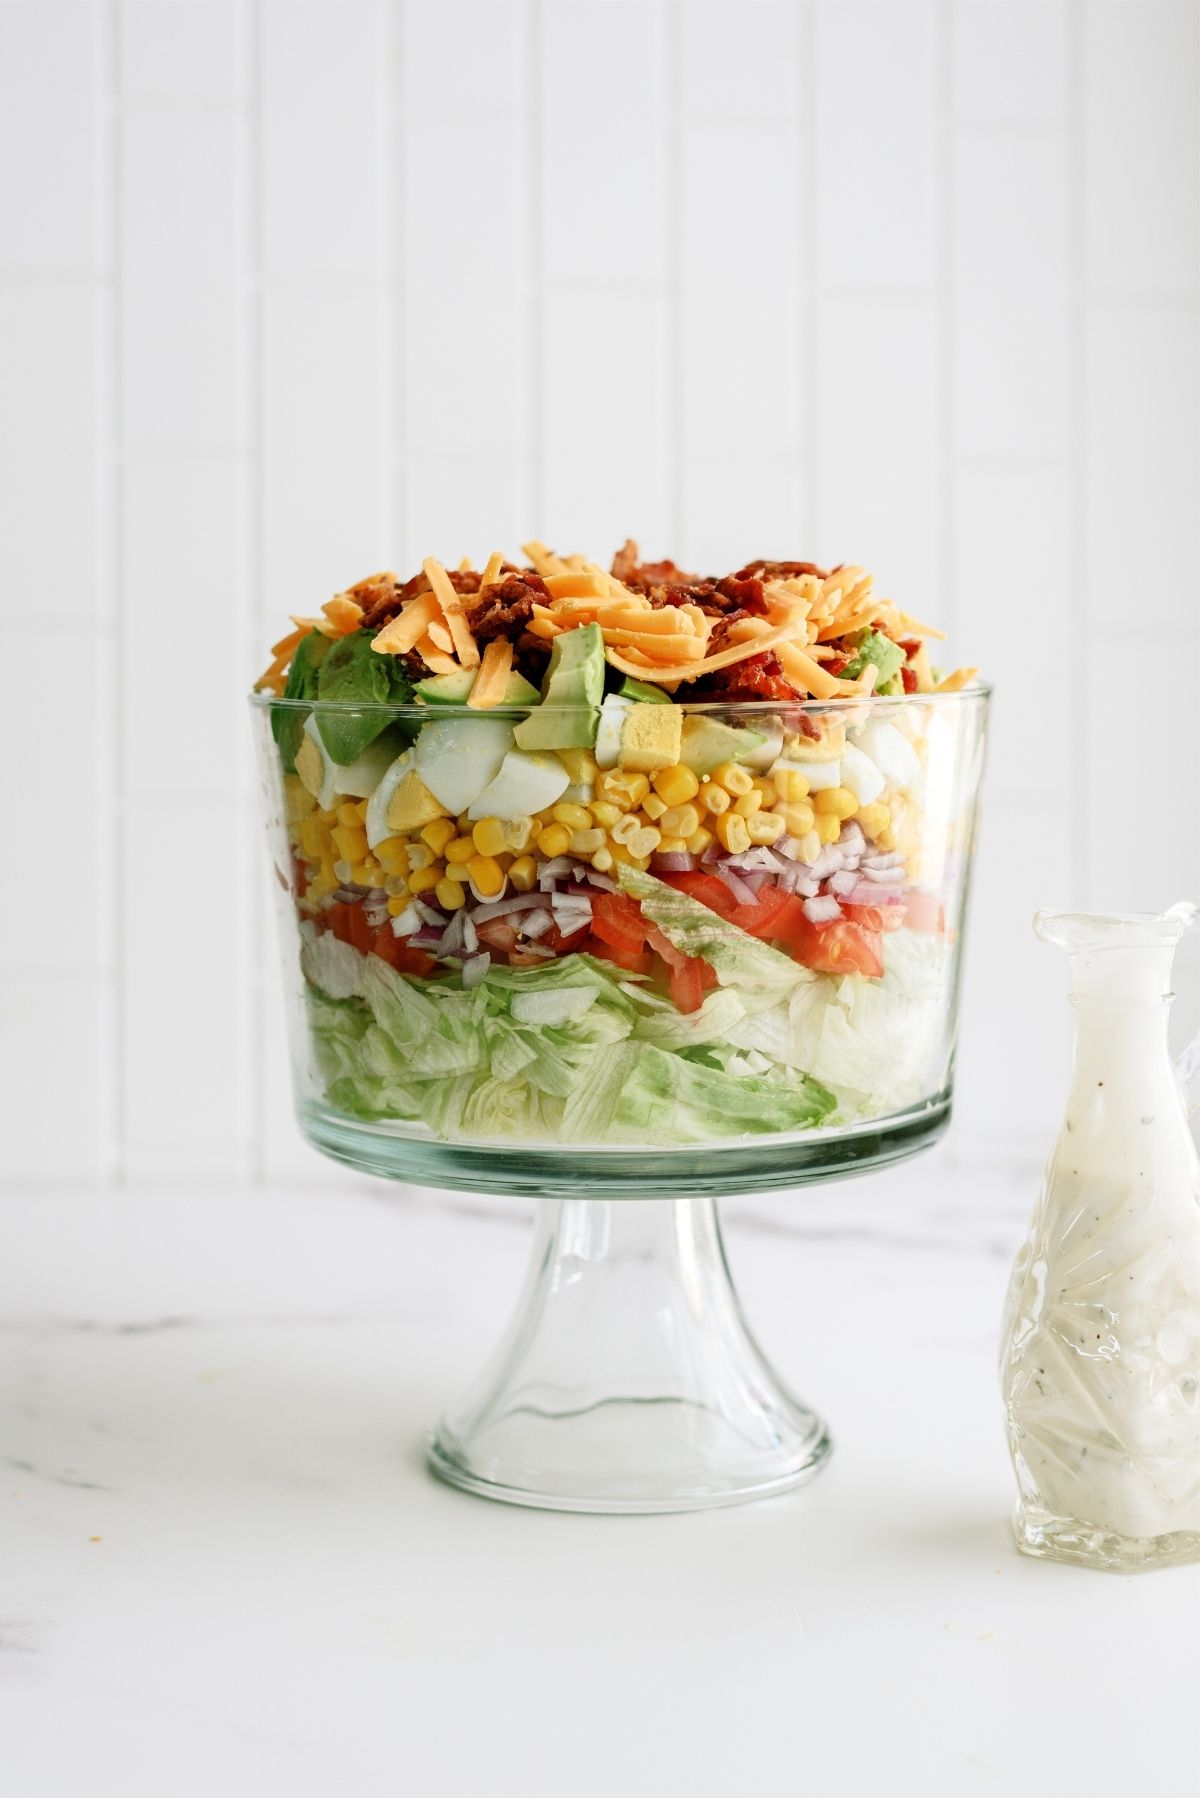 Layered Cobb Salad Recipe
